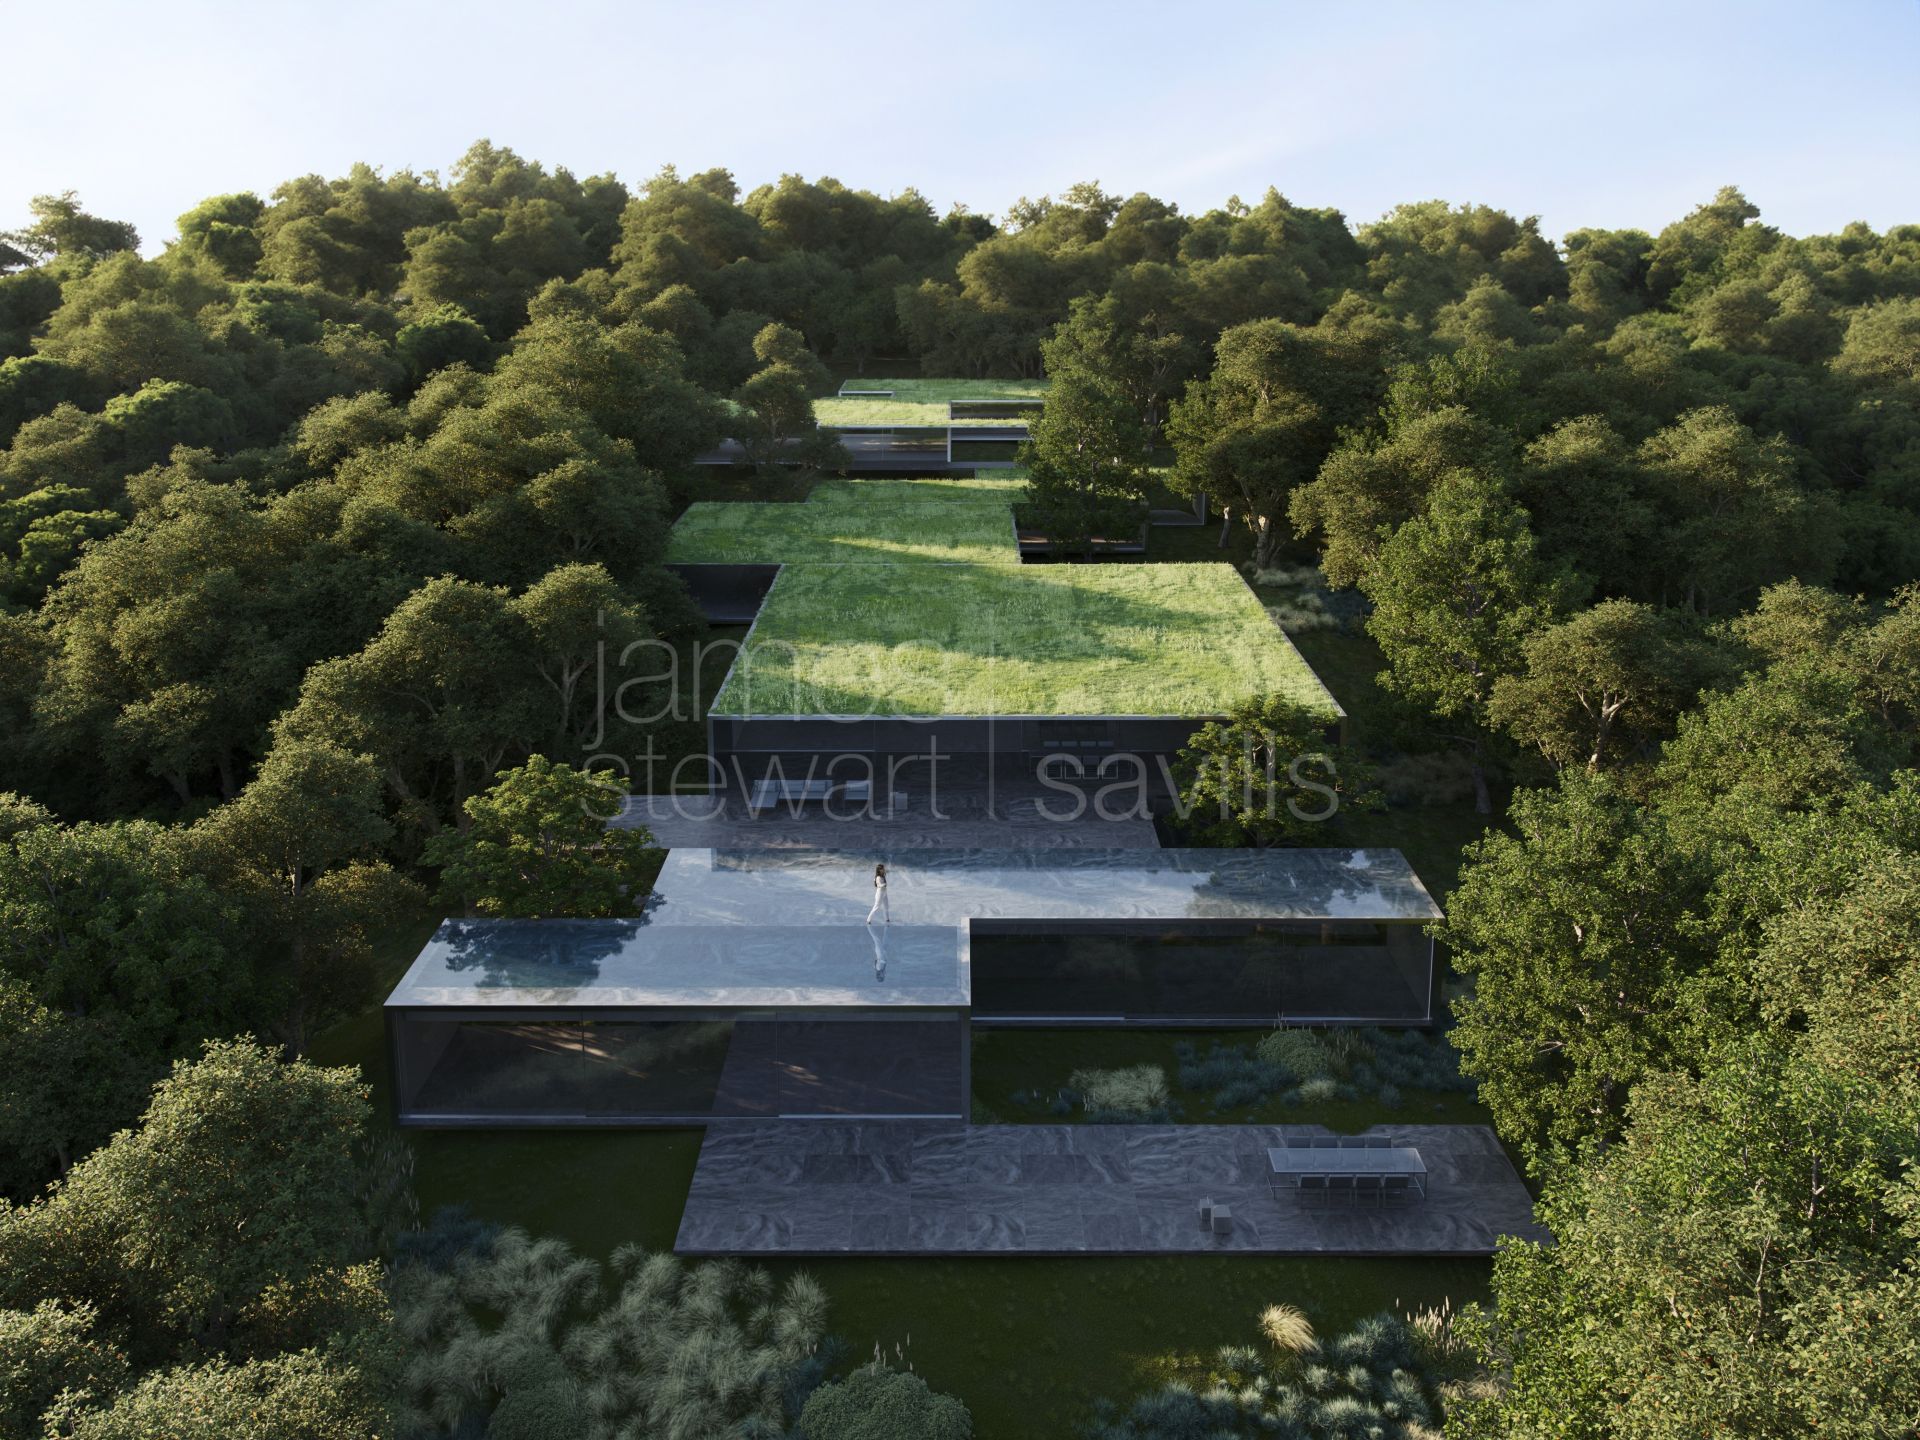 Sustainable Villa with Avant-Garde Design by Fran Silvestre Arquitectos